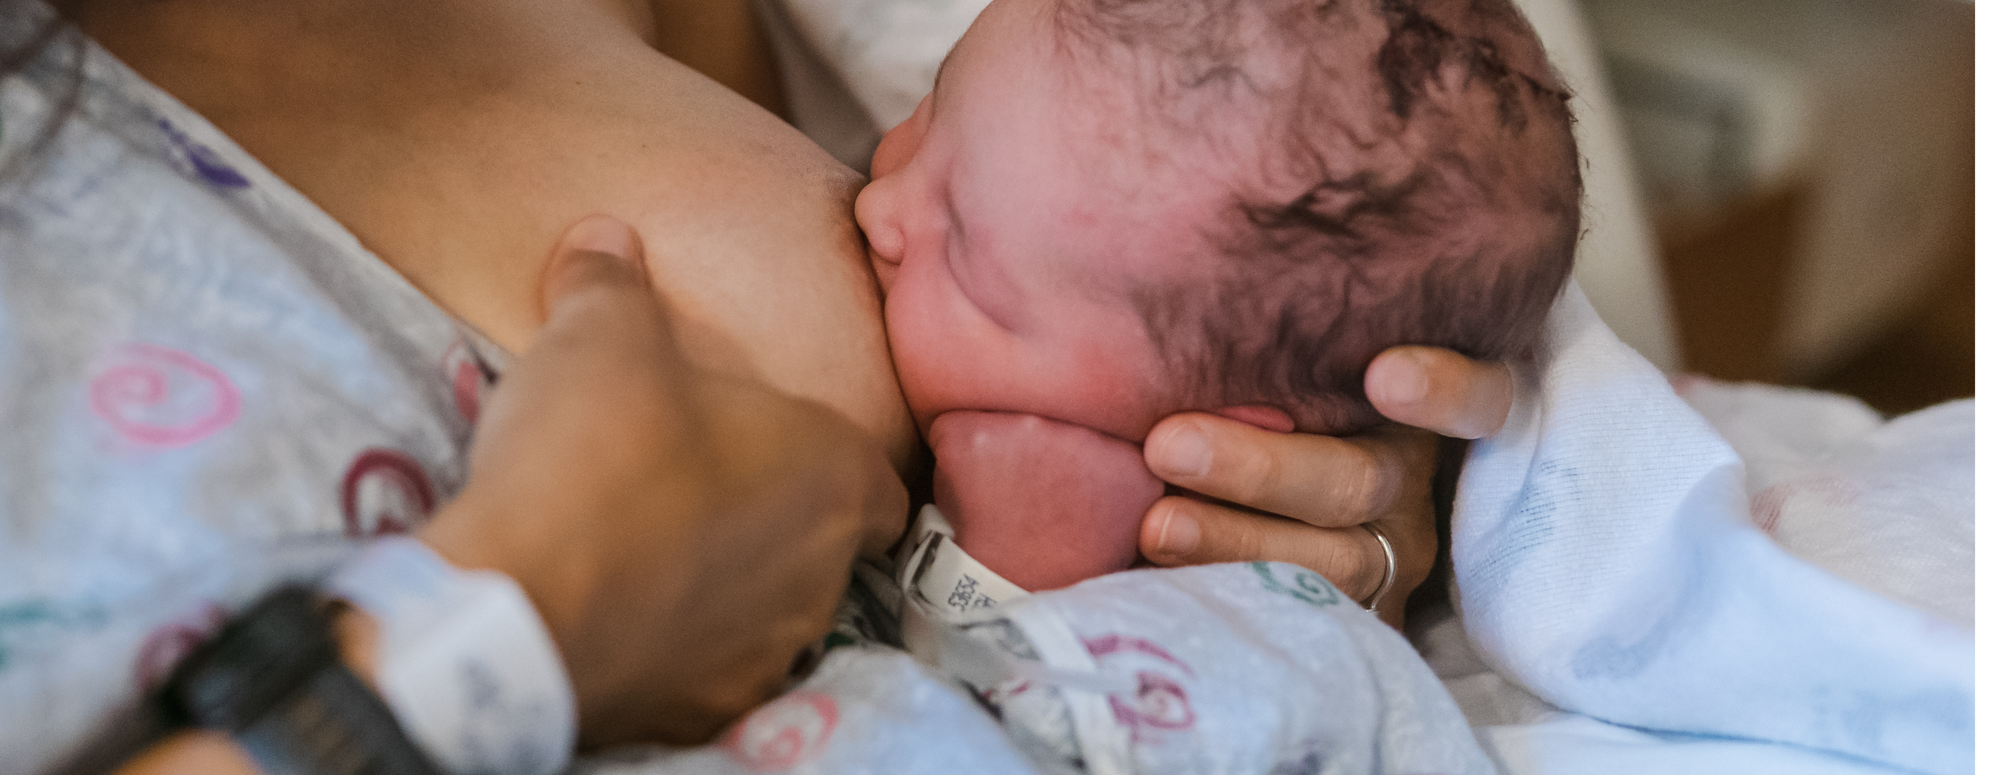 large nipples and latching, baby breastfeeding, newborn breastfeeding